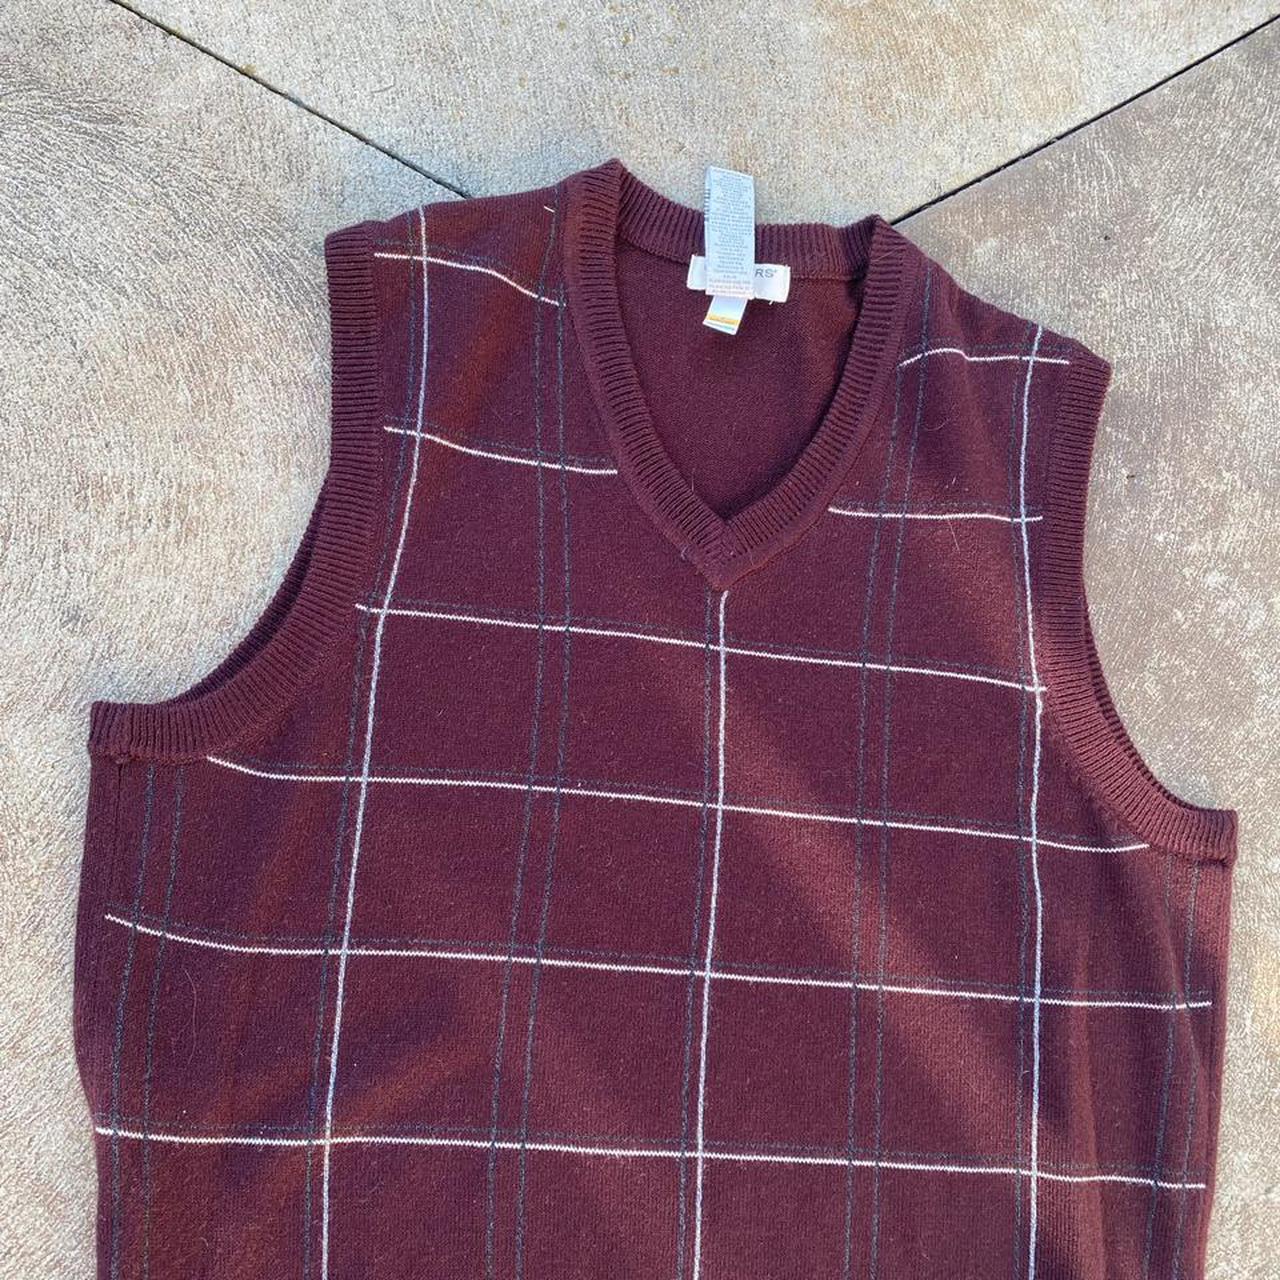 Product Image 1 - Maroon Sweater-vest
Super cute sweater vest.